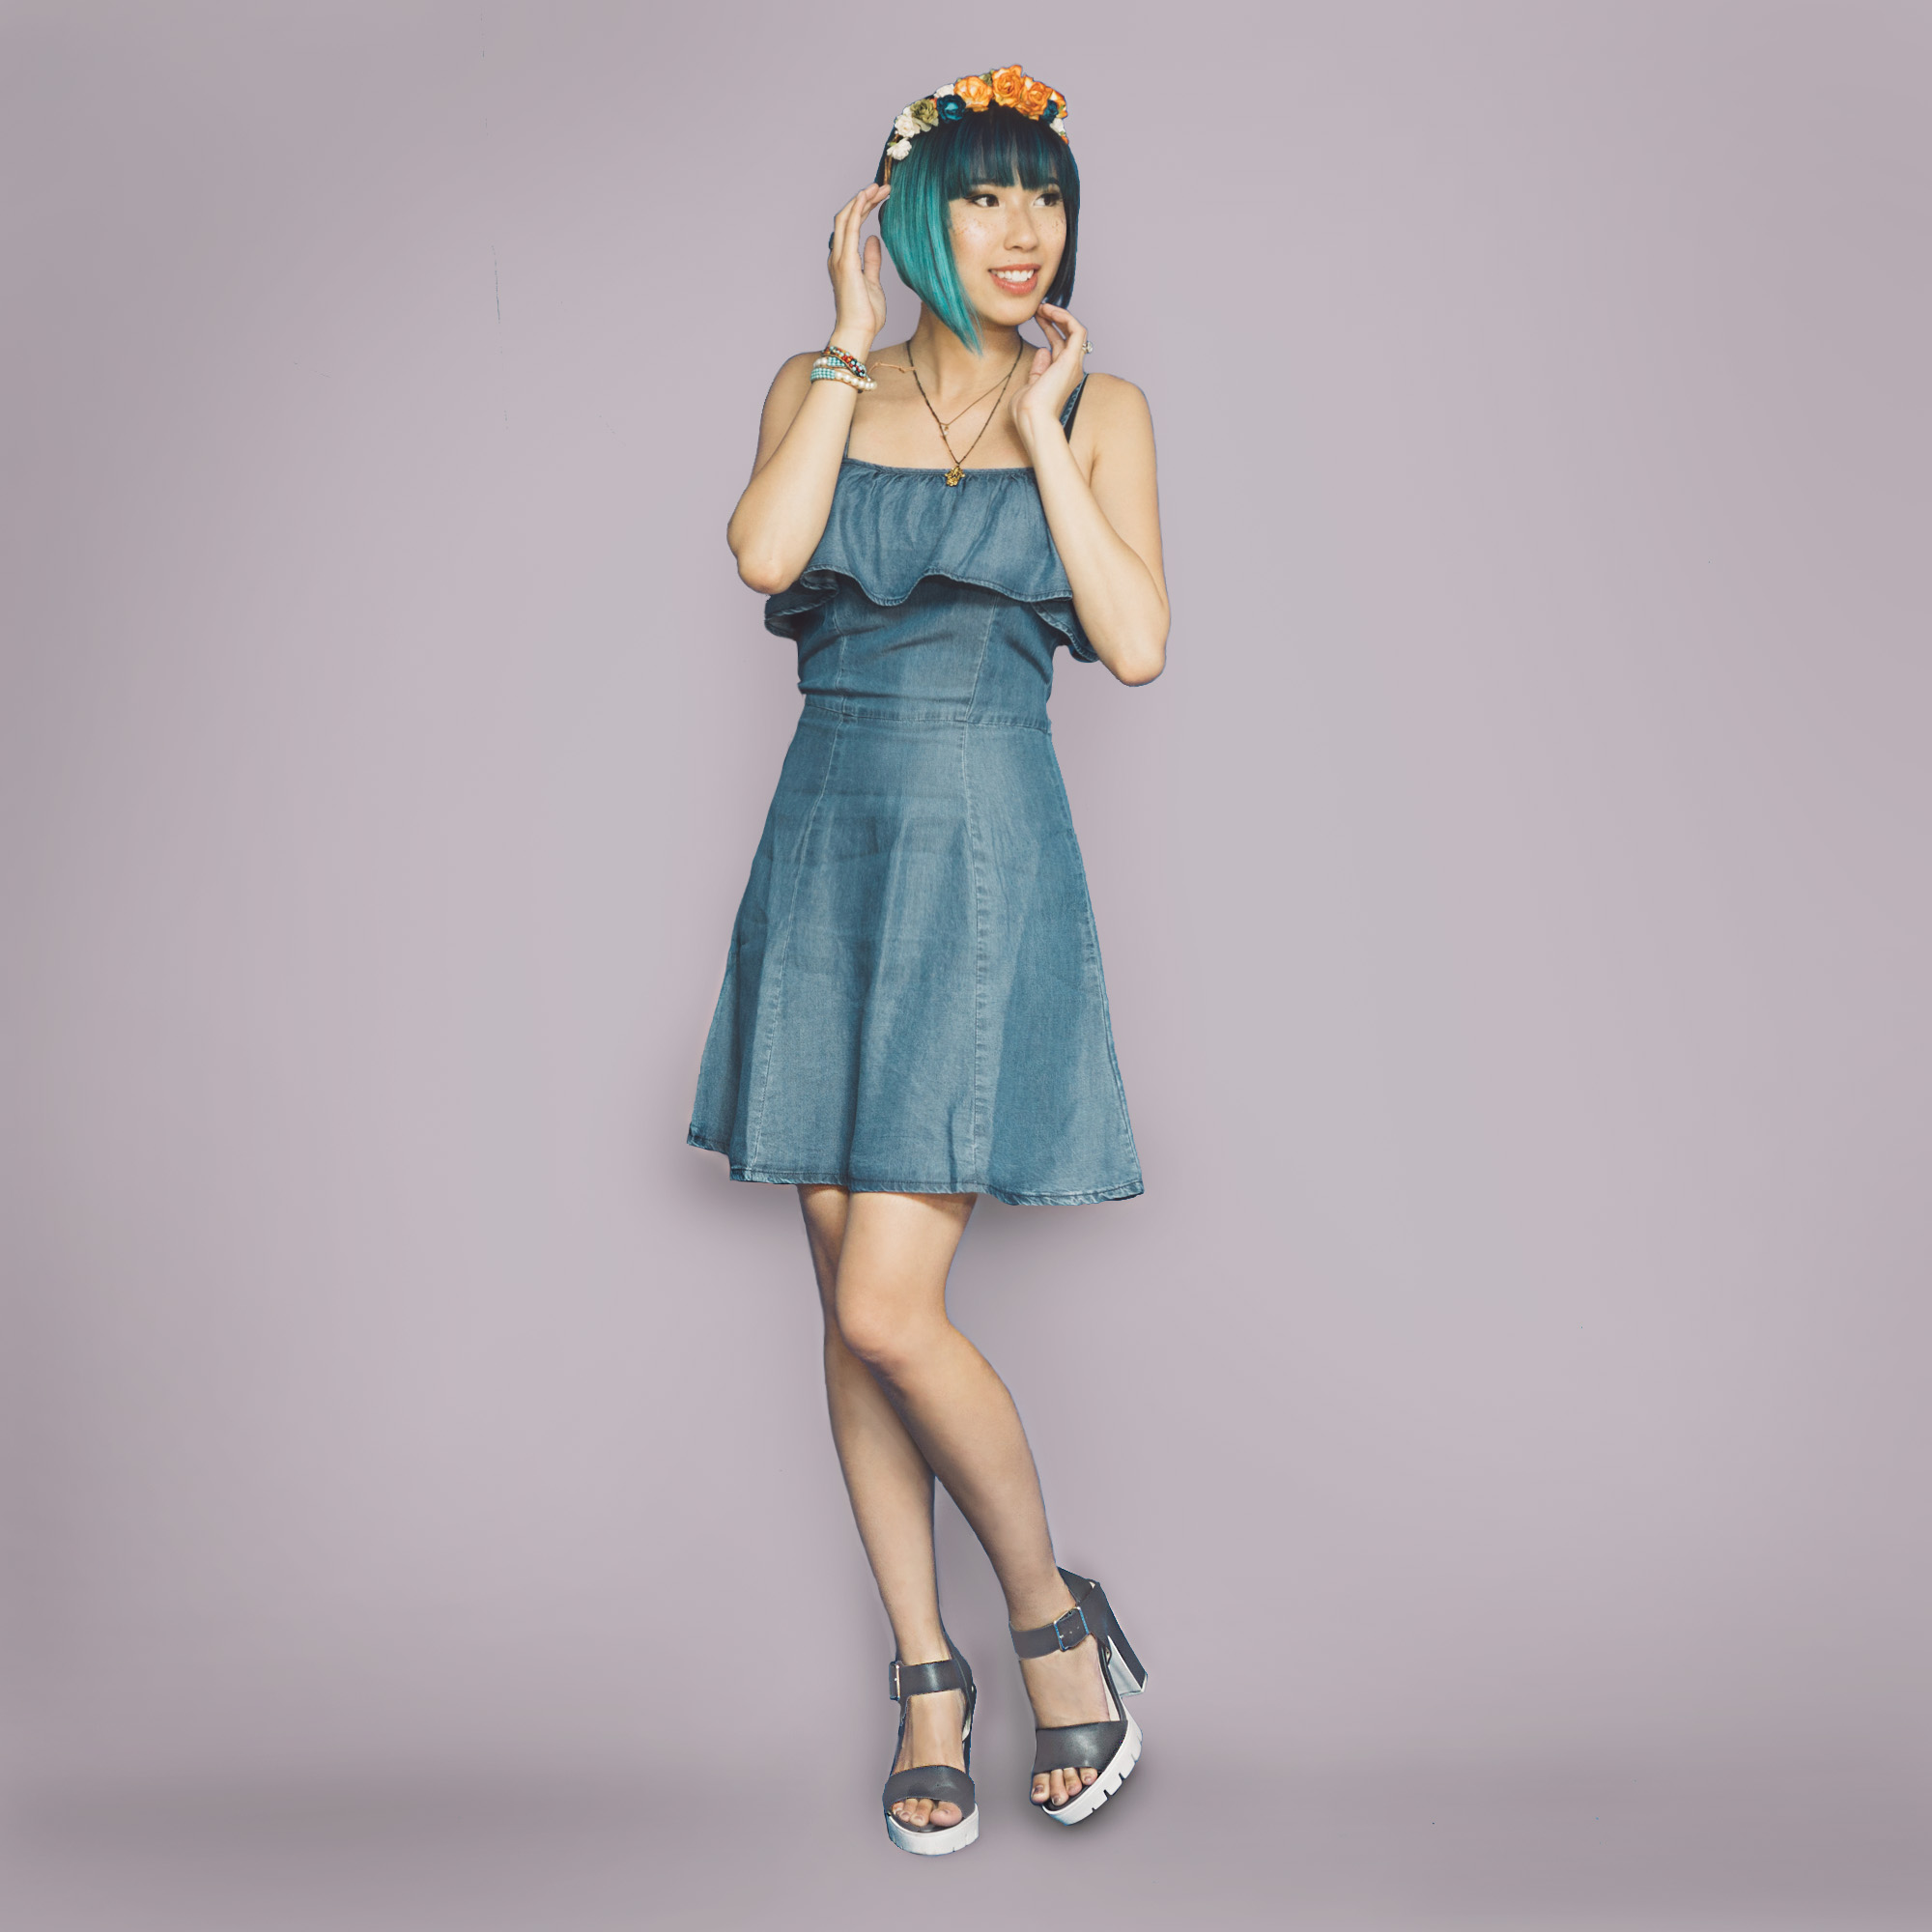   Dress :  Ashley Flirty Denim Dress    Shoes:   Lug Sole Platform Sandals    Flower Crown :  Ardent Reverie Headdress (similar)   